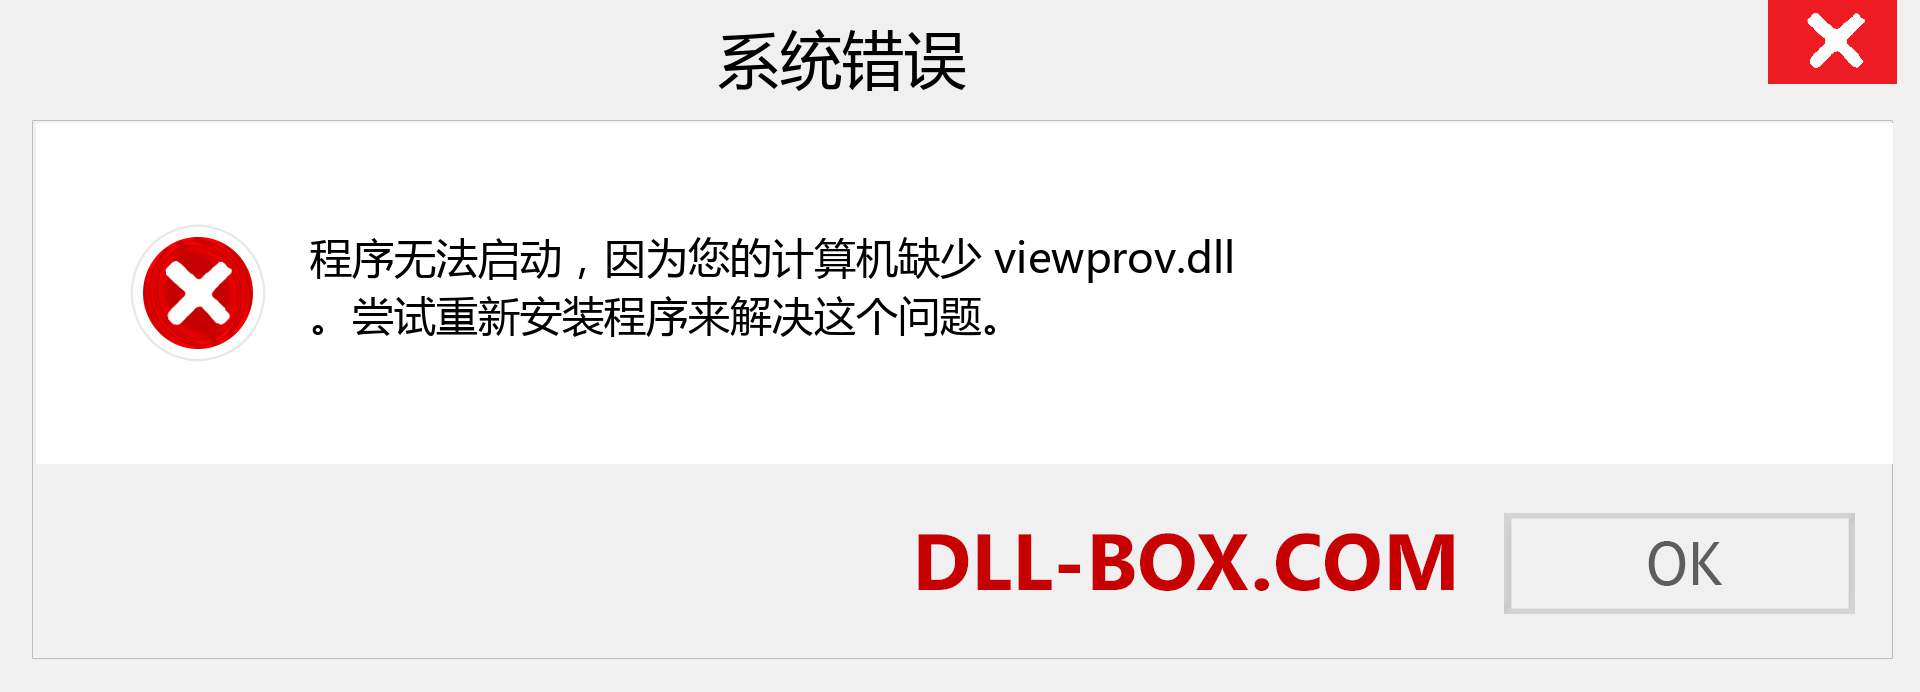 viewprov.dll 文件丢失？。 适用于 Windows 7、8、10 的下载 - 修复 Windows、照片、图像上的 viewprov dll 丢失错误